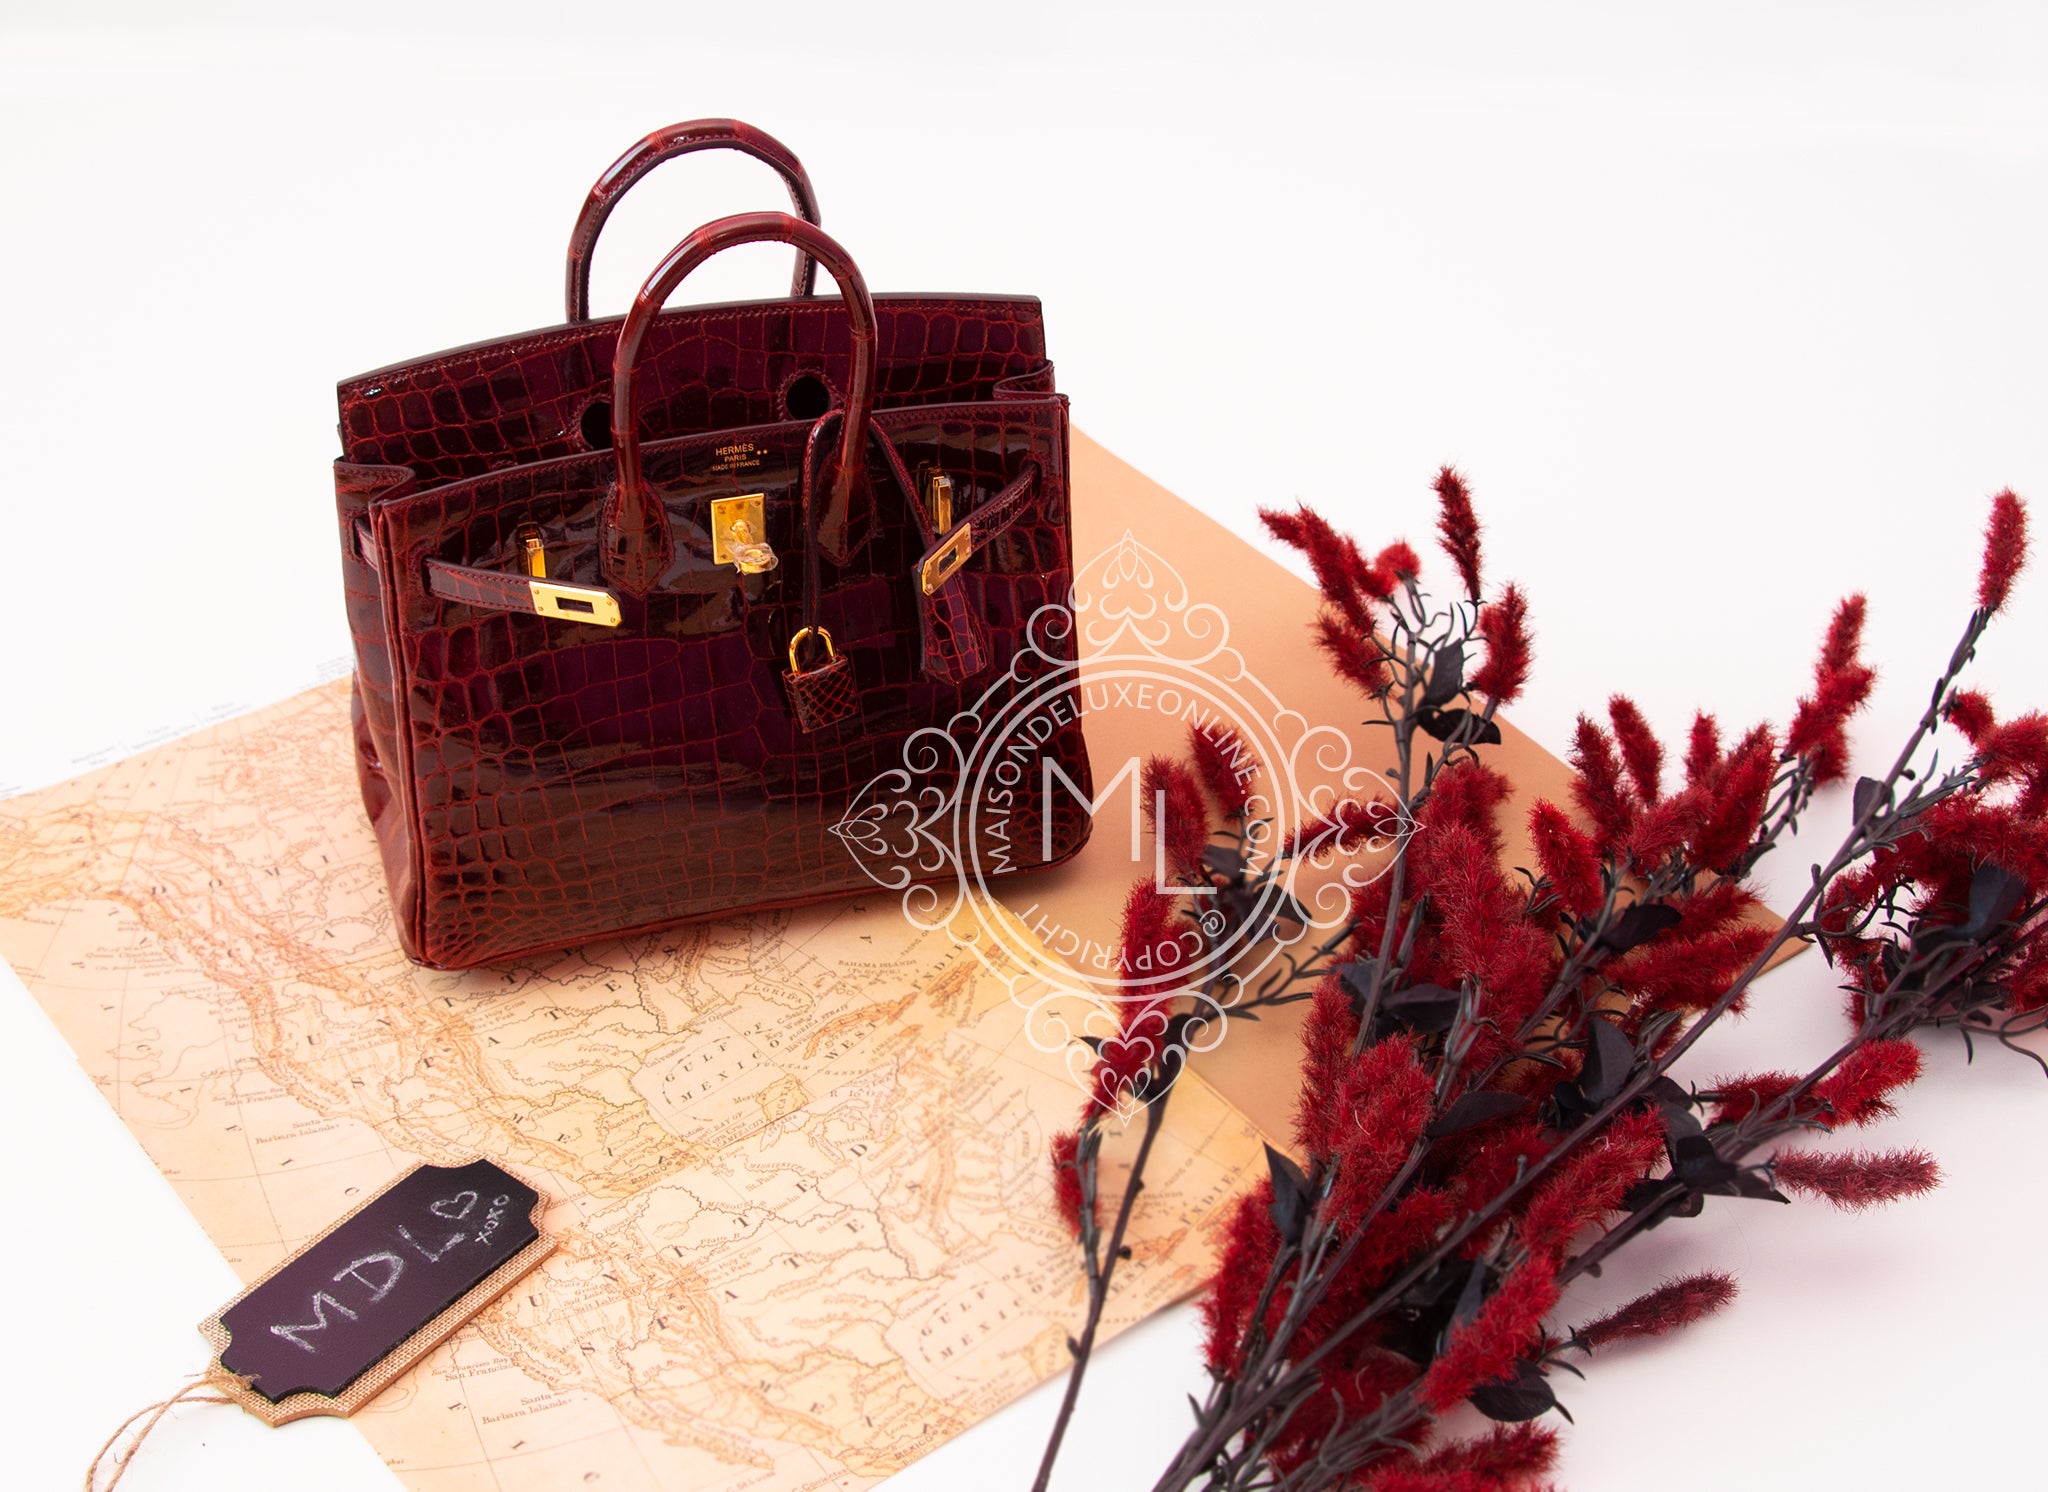 Gorgeous rich burgundy wine colour Birkin bag by Hermes. Stylish